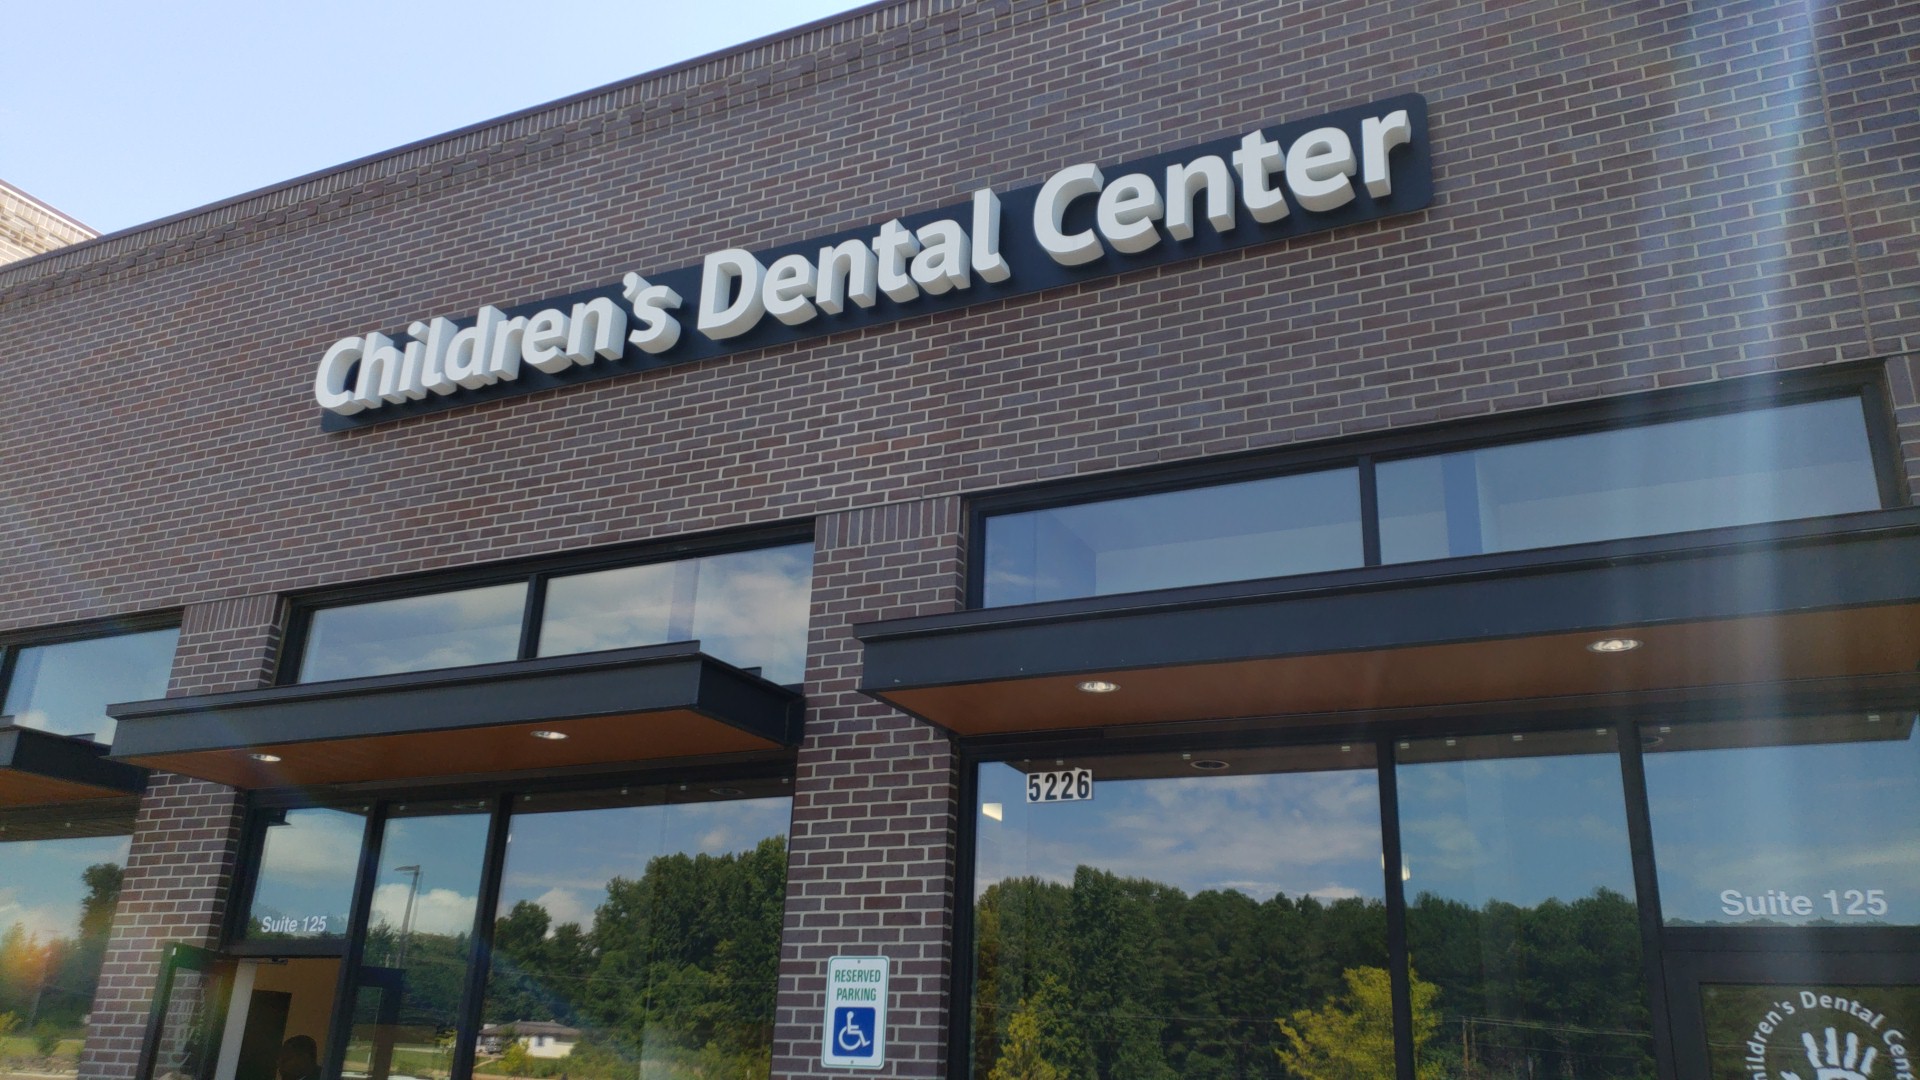 Children's Dental Center-Arlington 5226 Airline Rd #125, Arlington Tennessee 38002